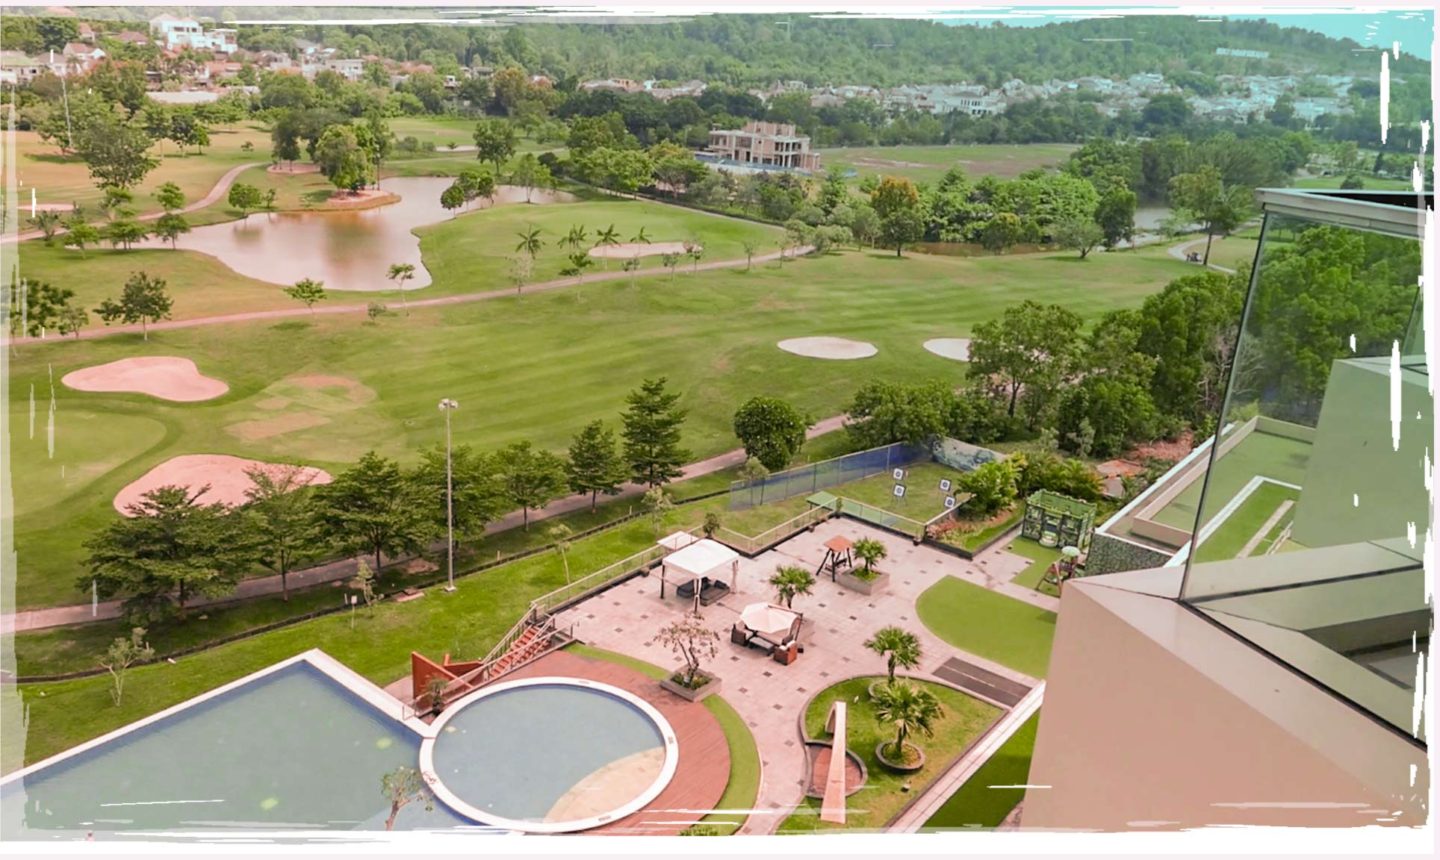 Batam | Radisson Hotel Perfect For Families & Golfers